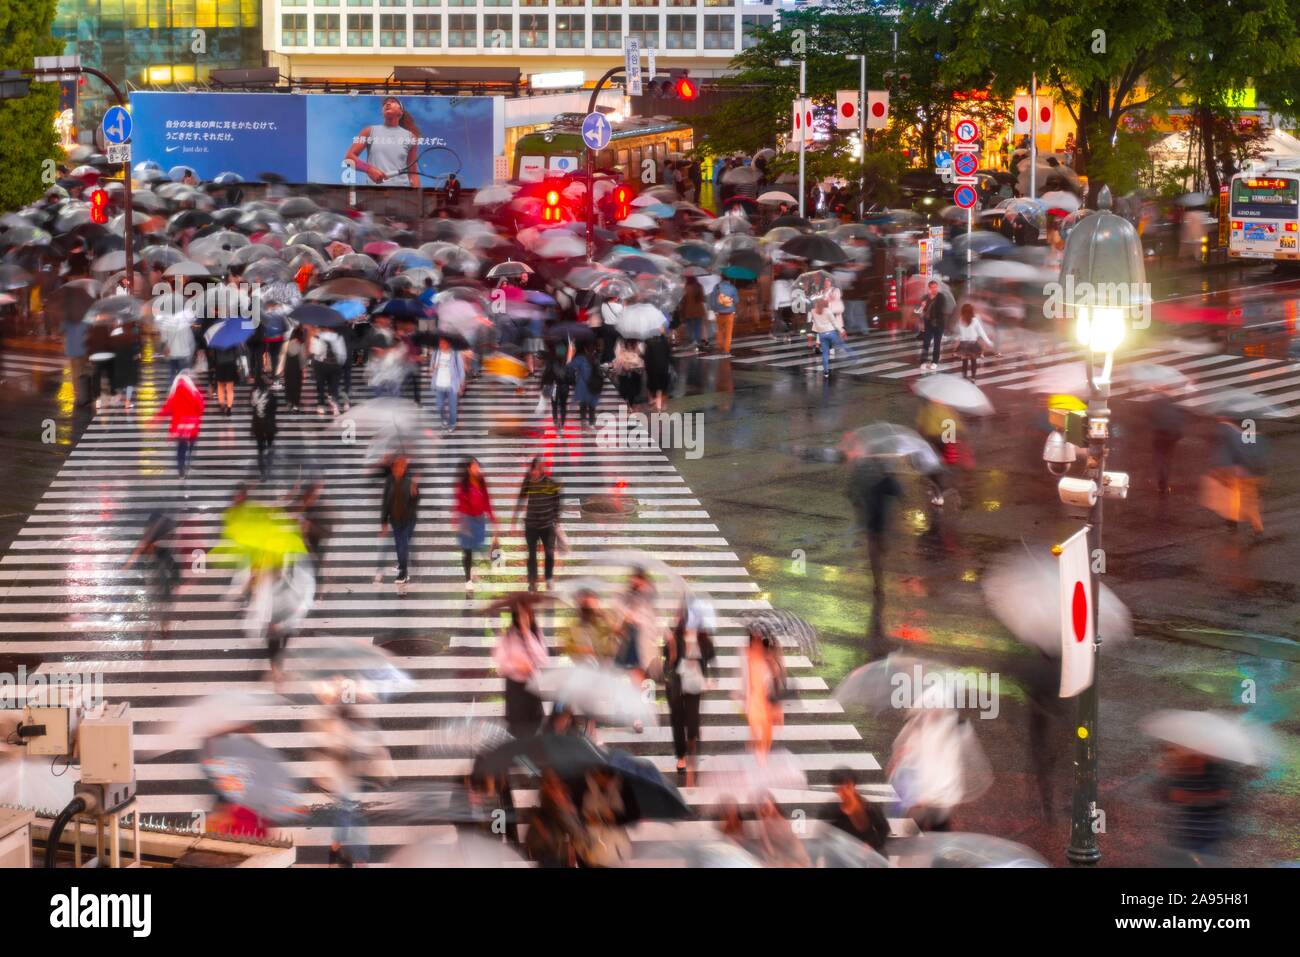 Masse mit Sonnenschirmen auf Zebrastreifen nachts, Kreuzung Shibuya Crossing, Shibuya, Tokio, Japan Stockfoto